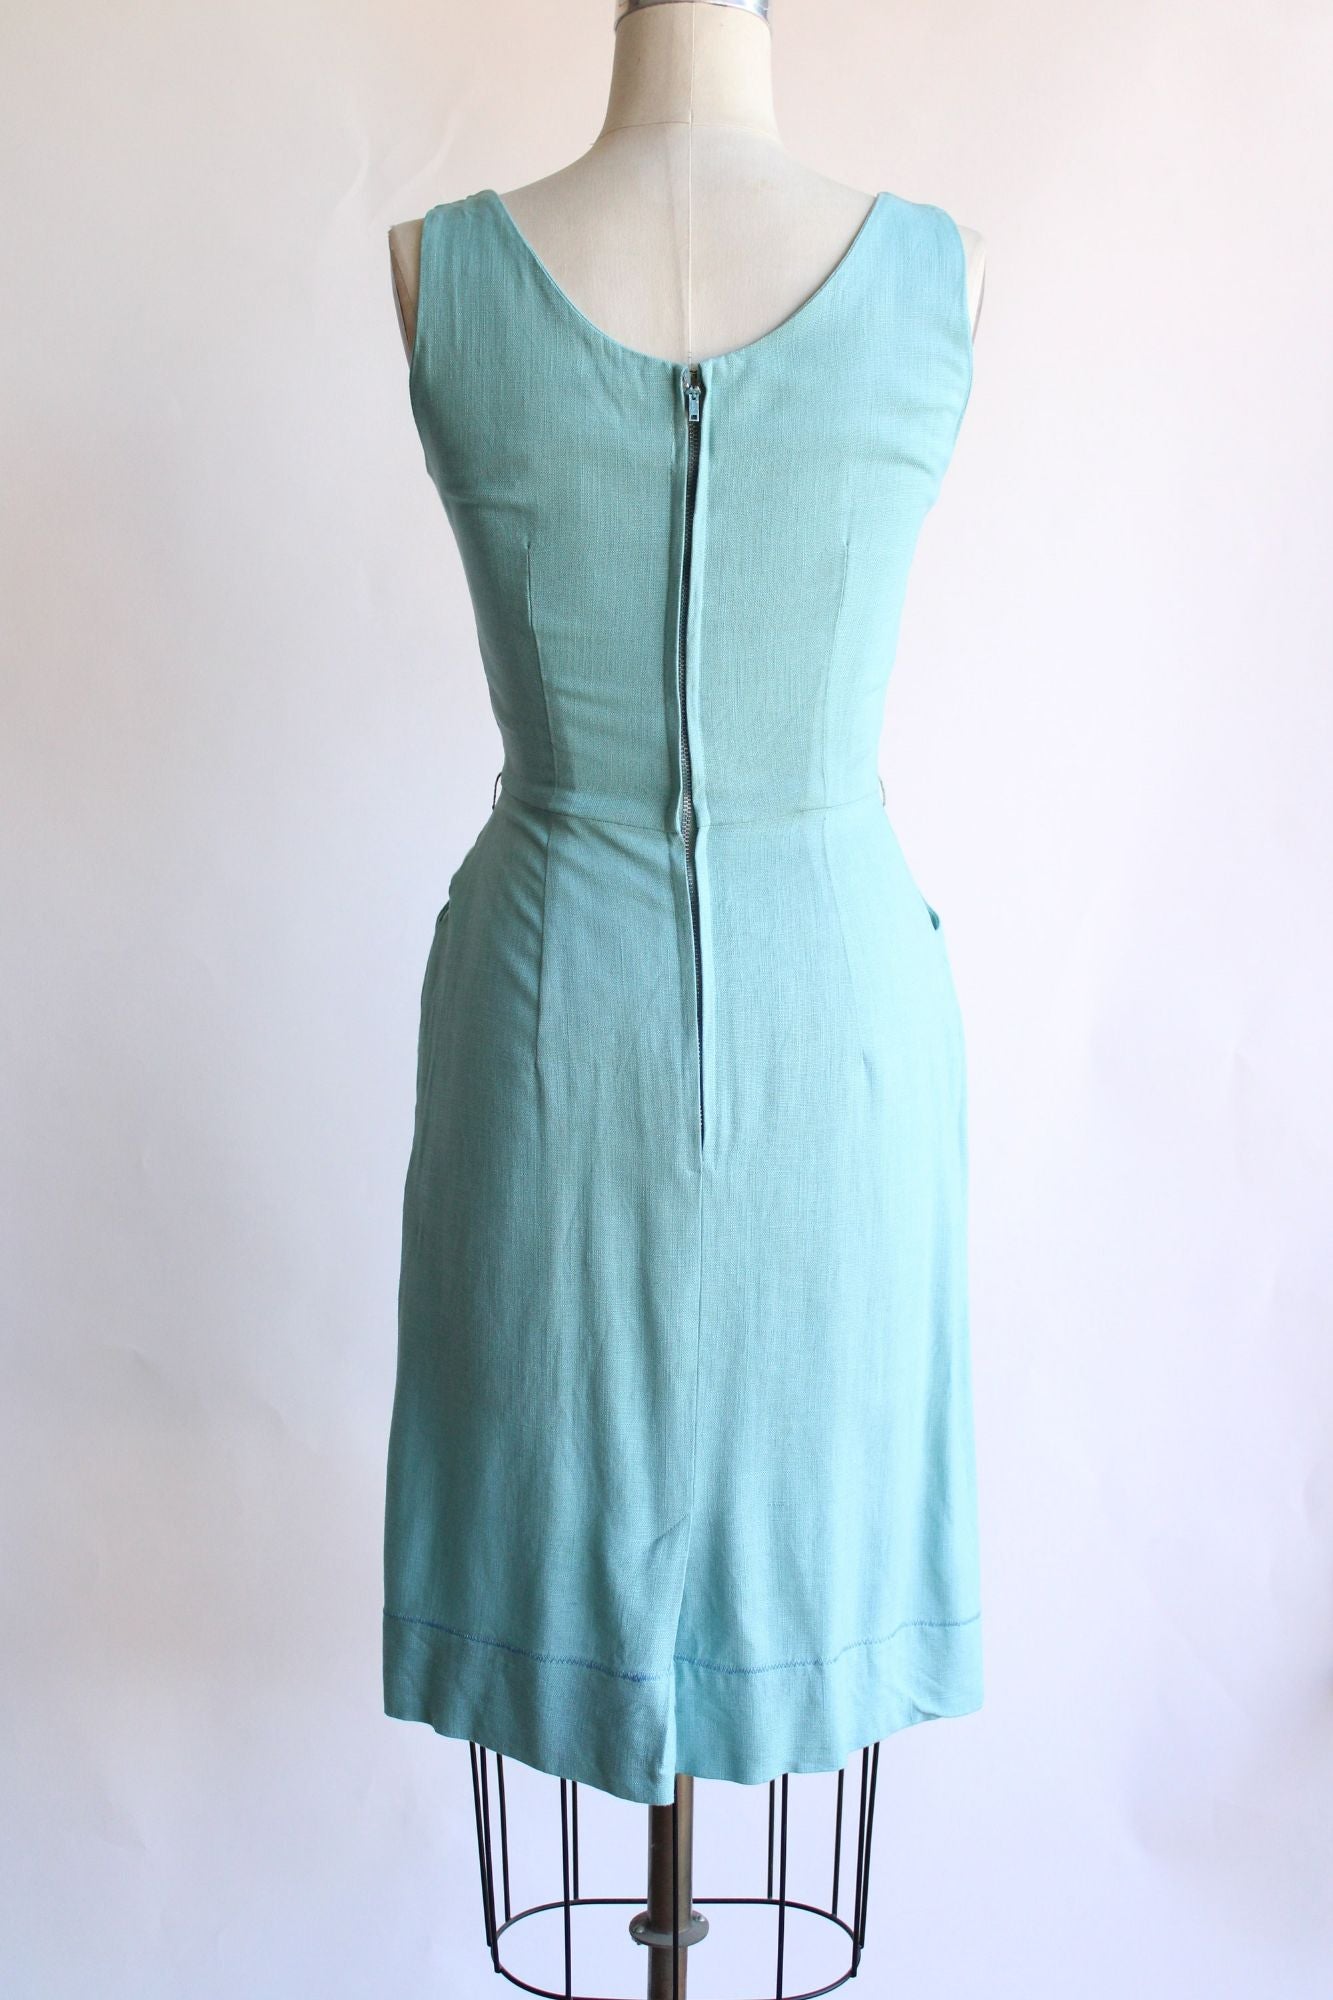 Vintage 1950s Wiggle Dress with Pockets in Robins Egg Blue Linen